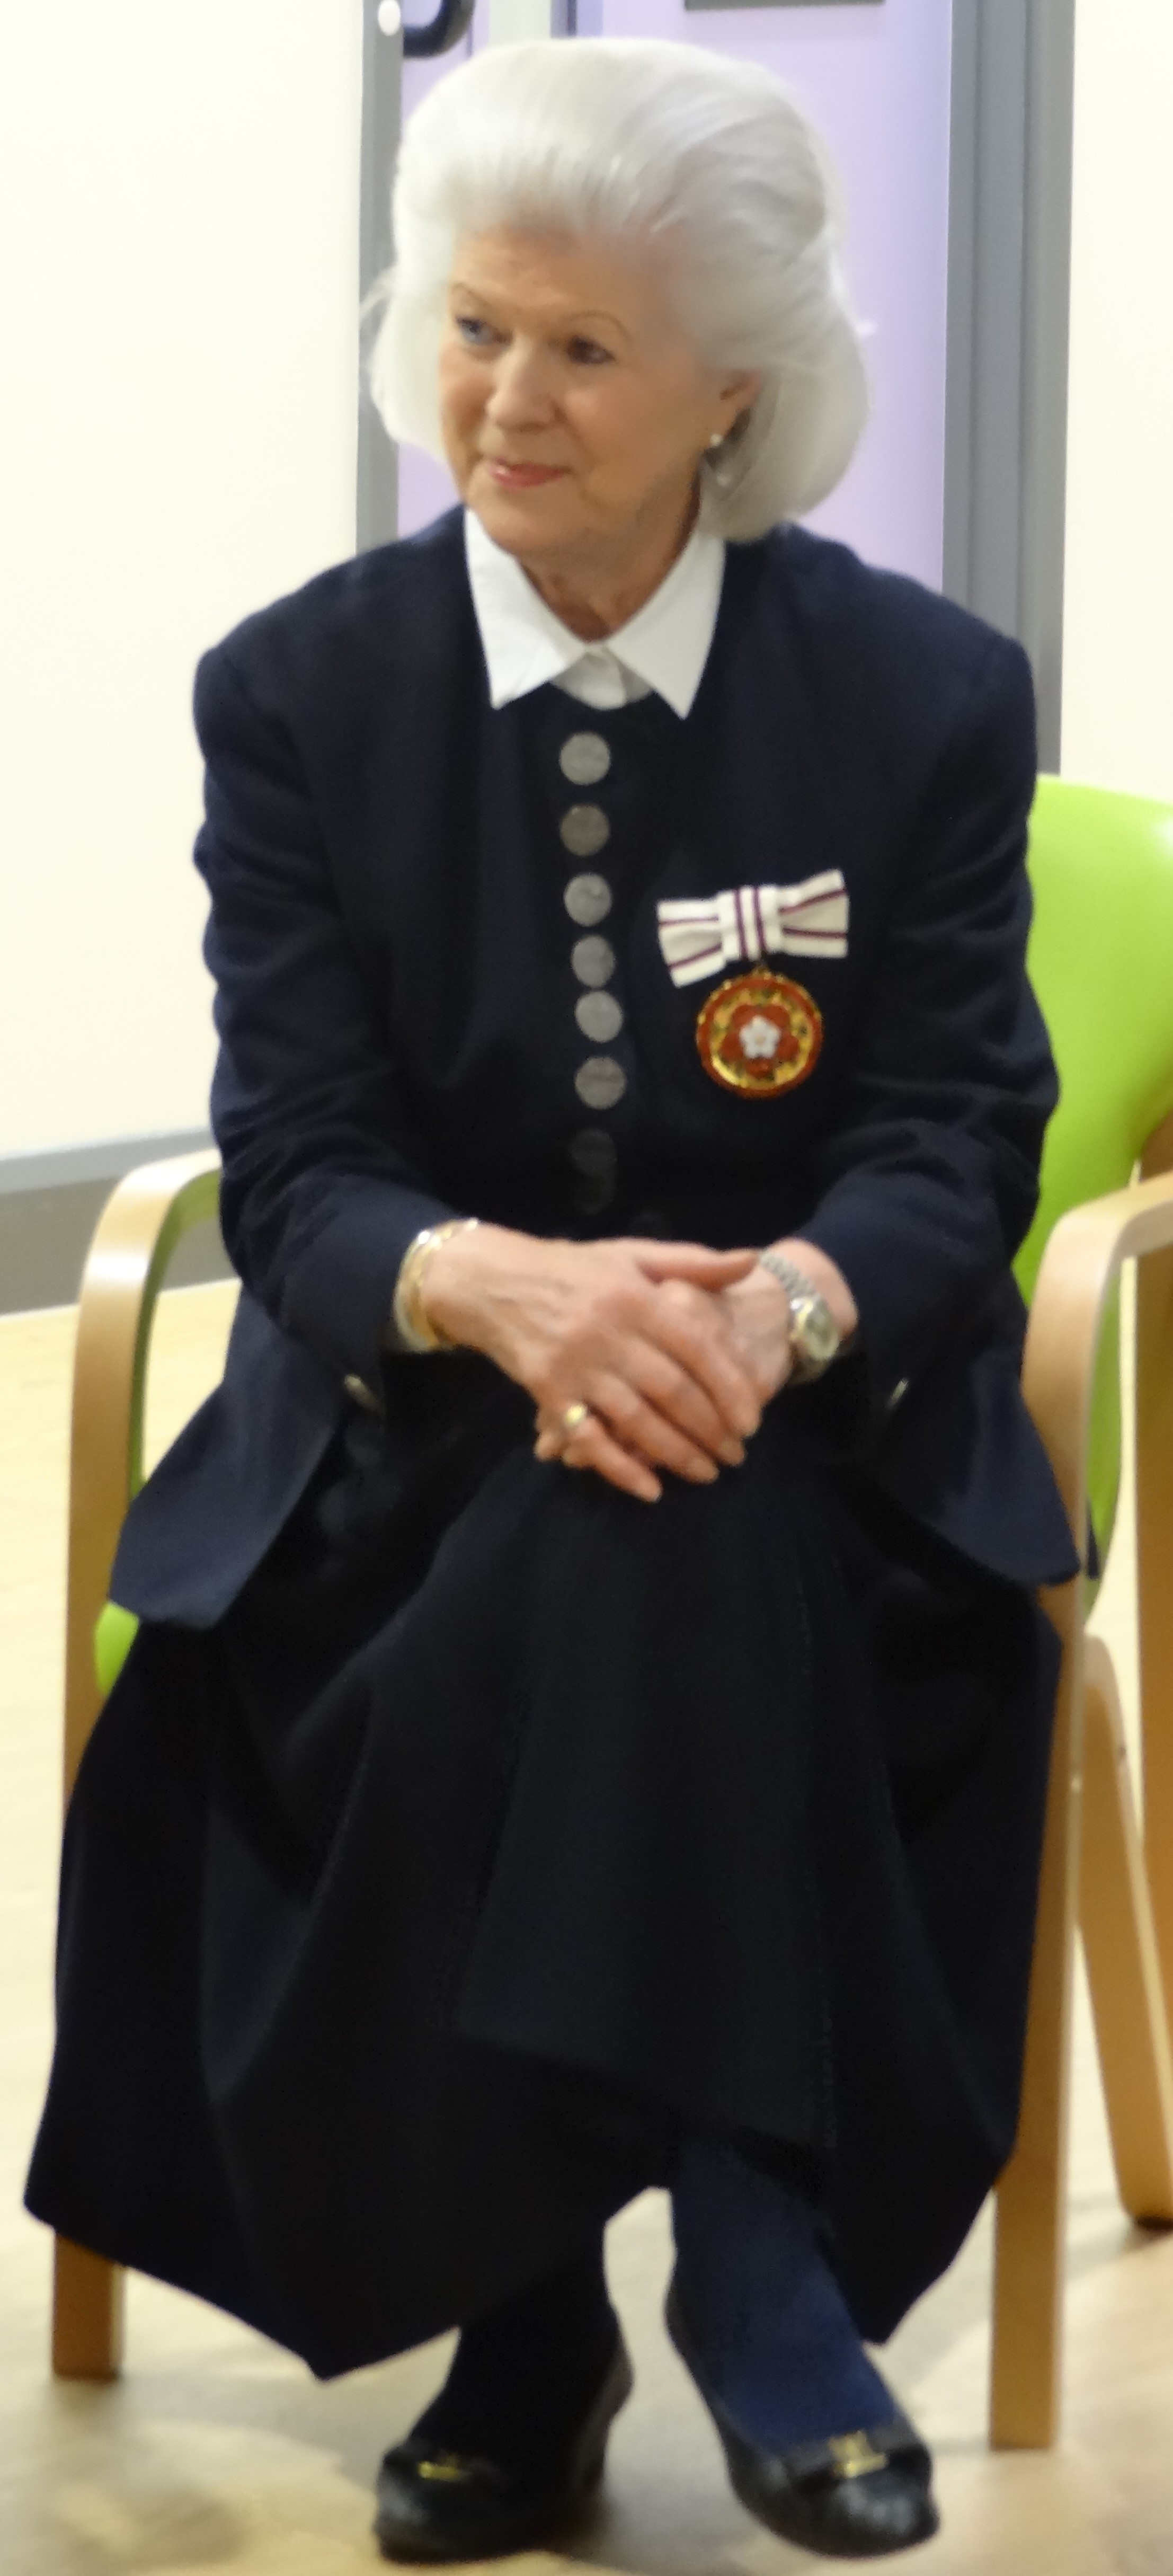 The Deputy Lord Lieutenant of Hampshire